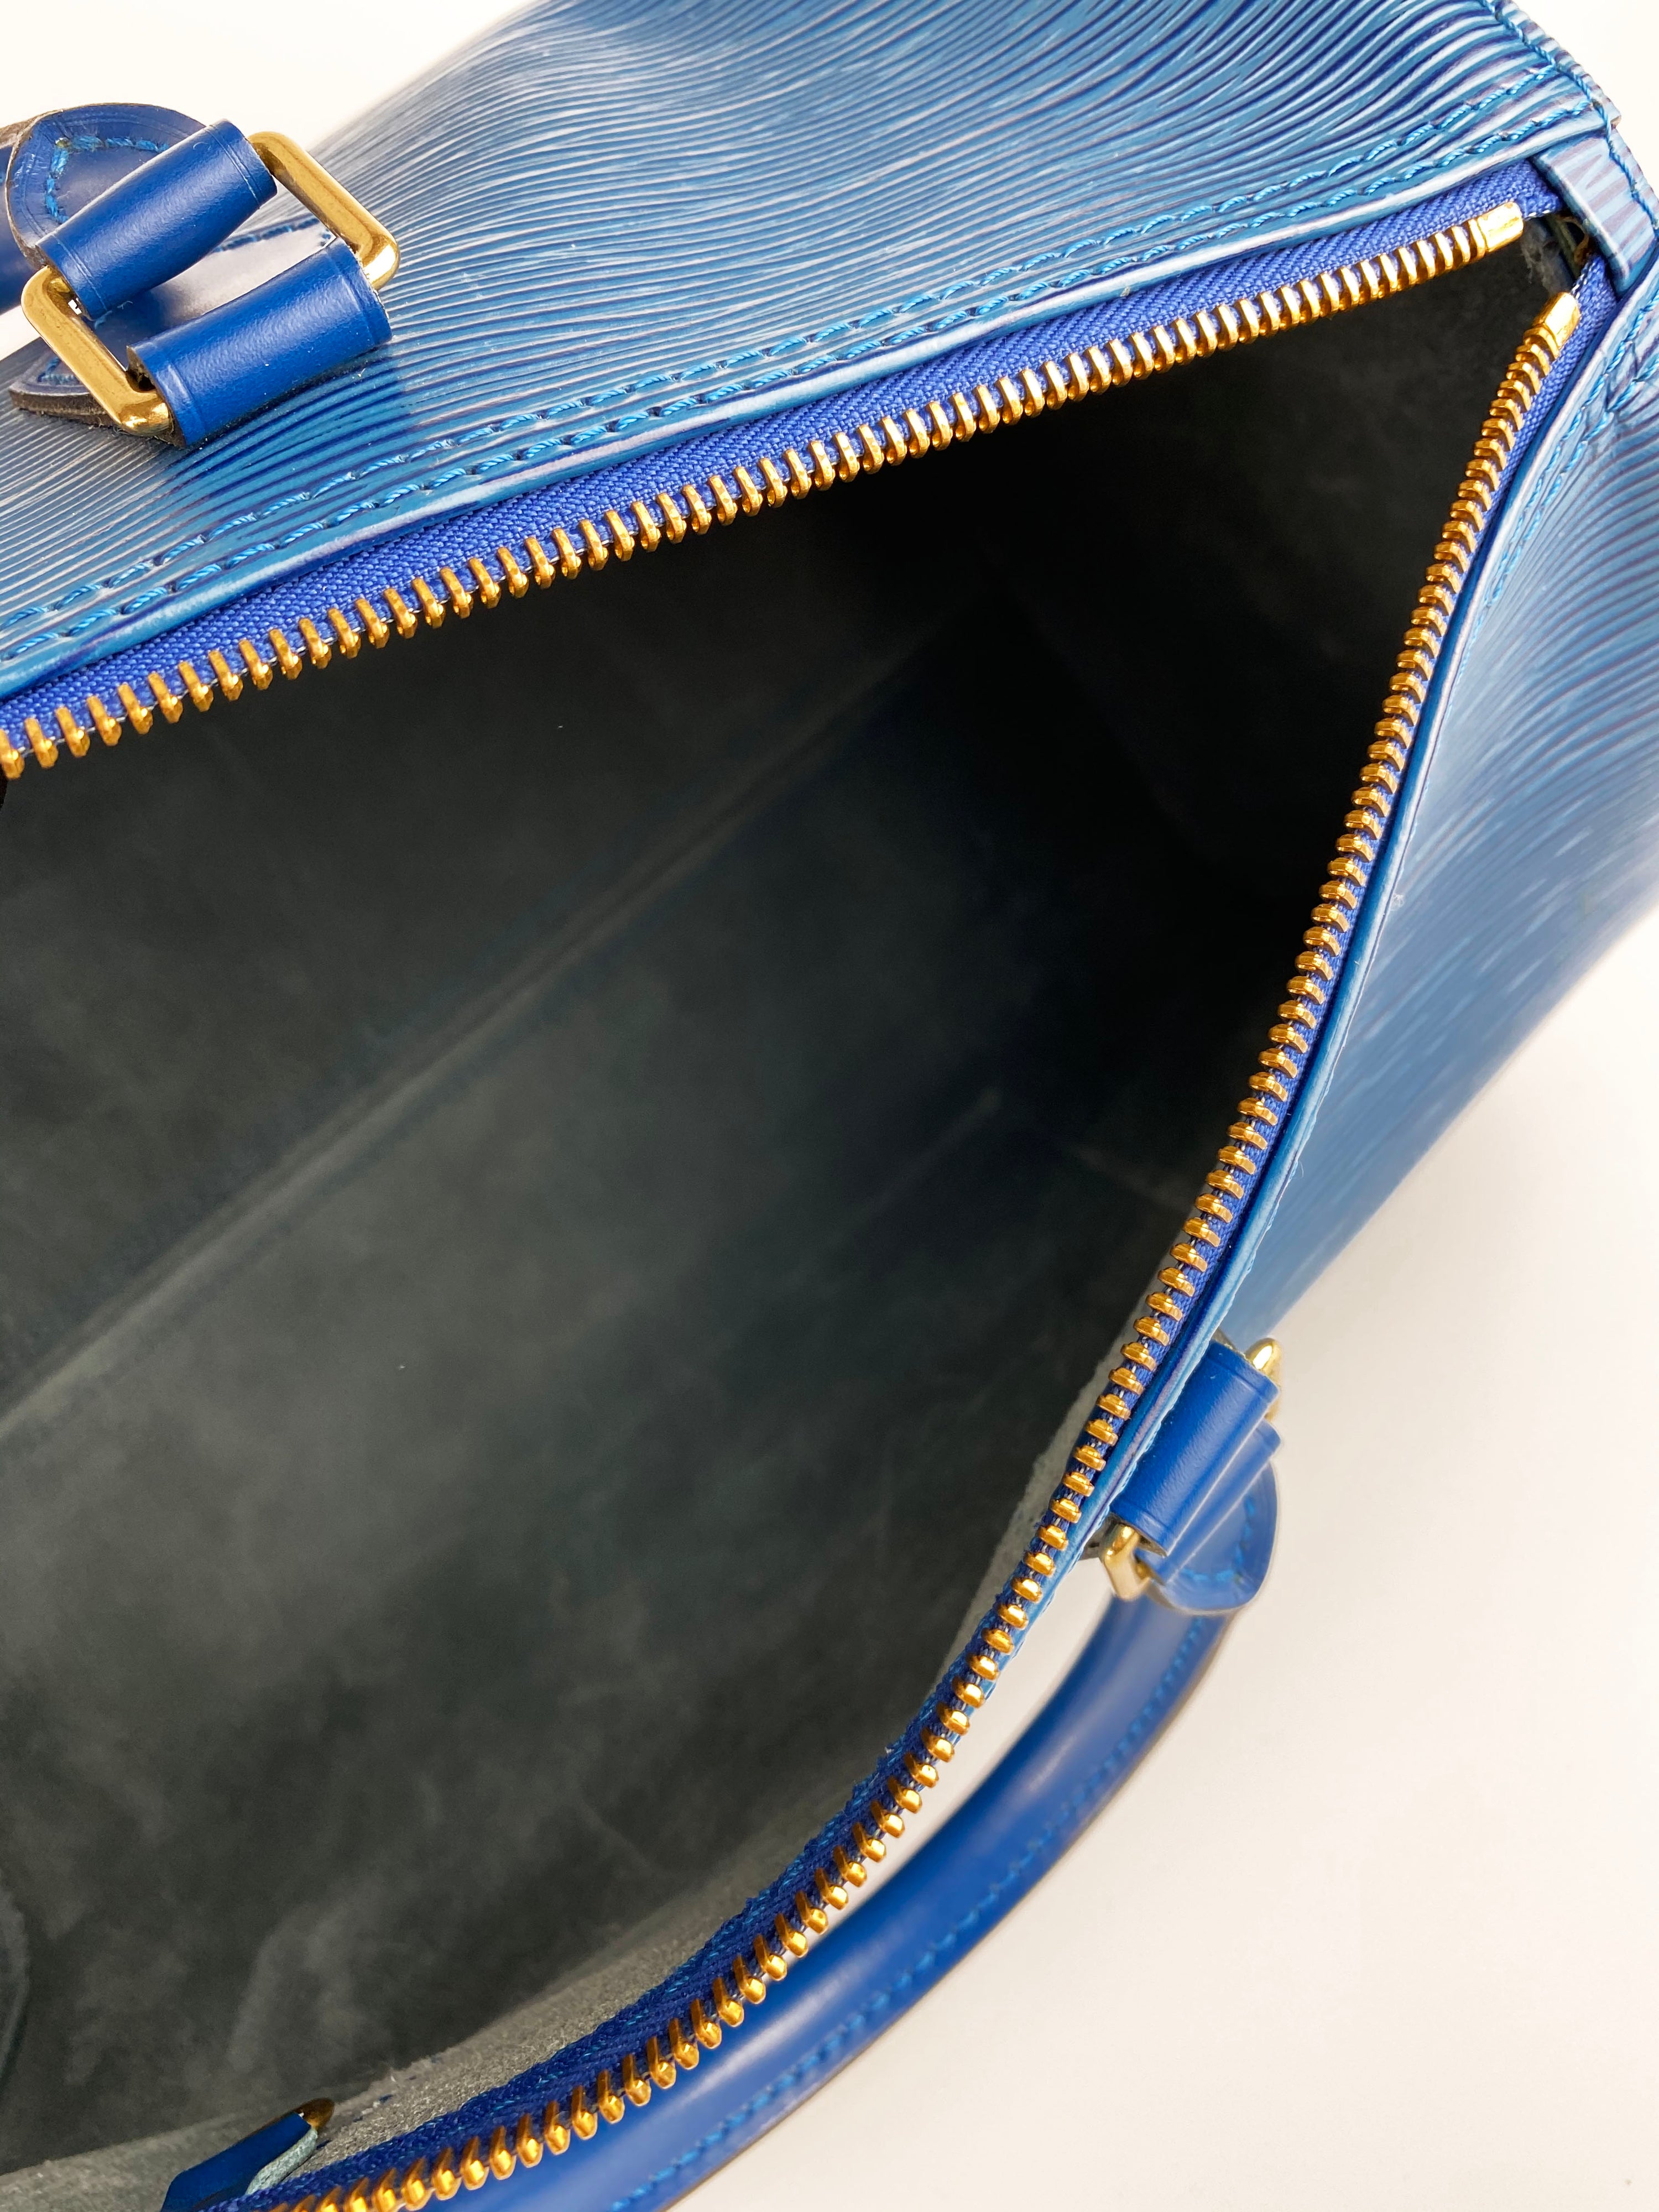 Louis Vuitton Speedy 35 Epi Toledo Blue Handbag